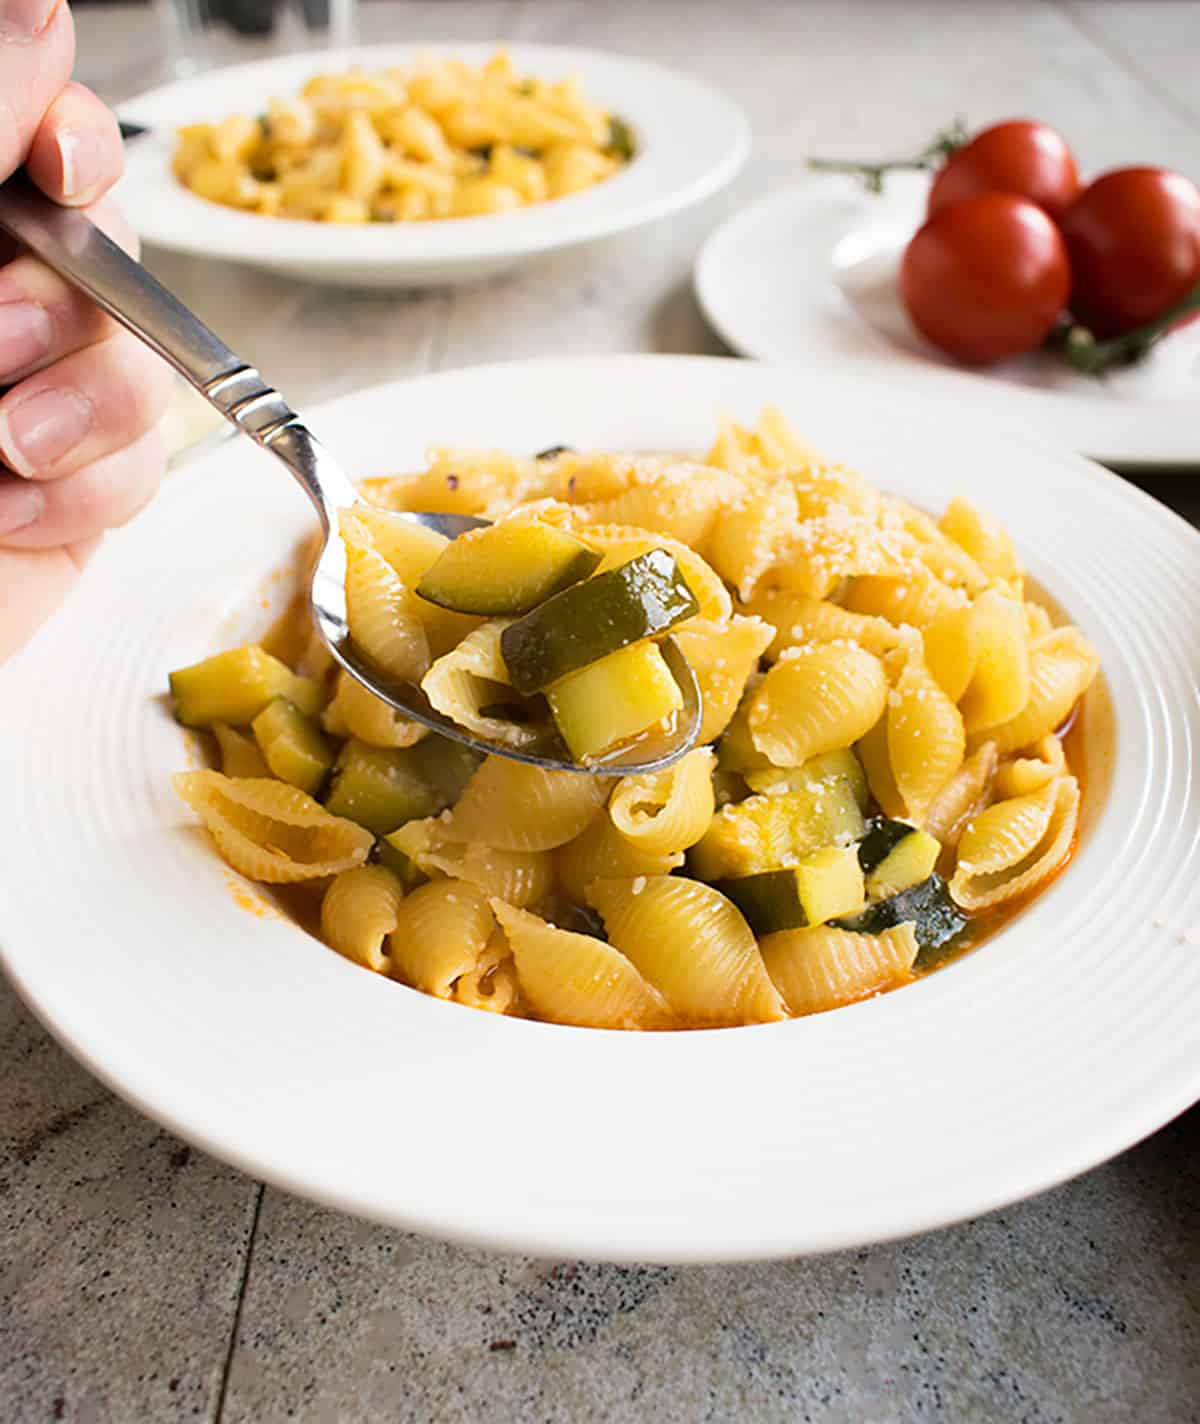 prepared pasta with zucchini in a soup dish